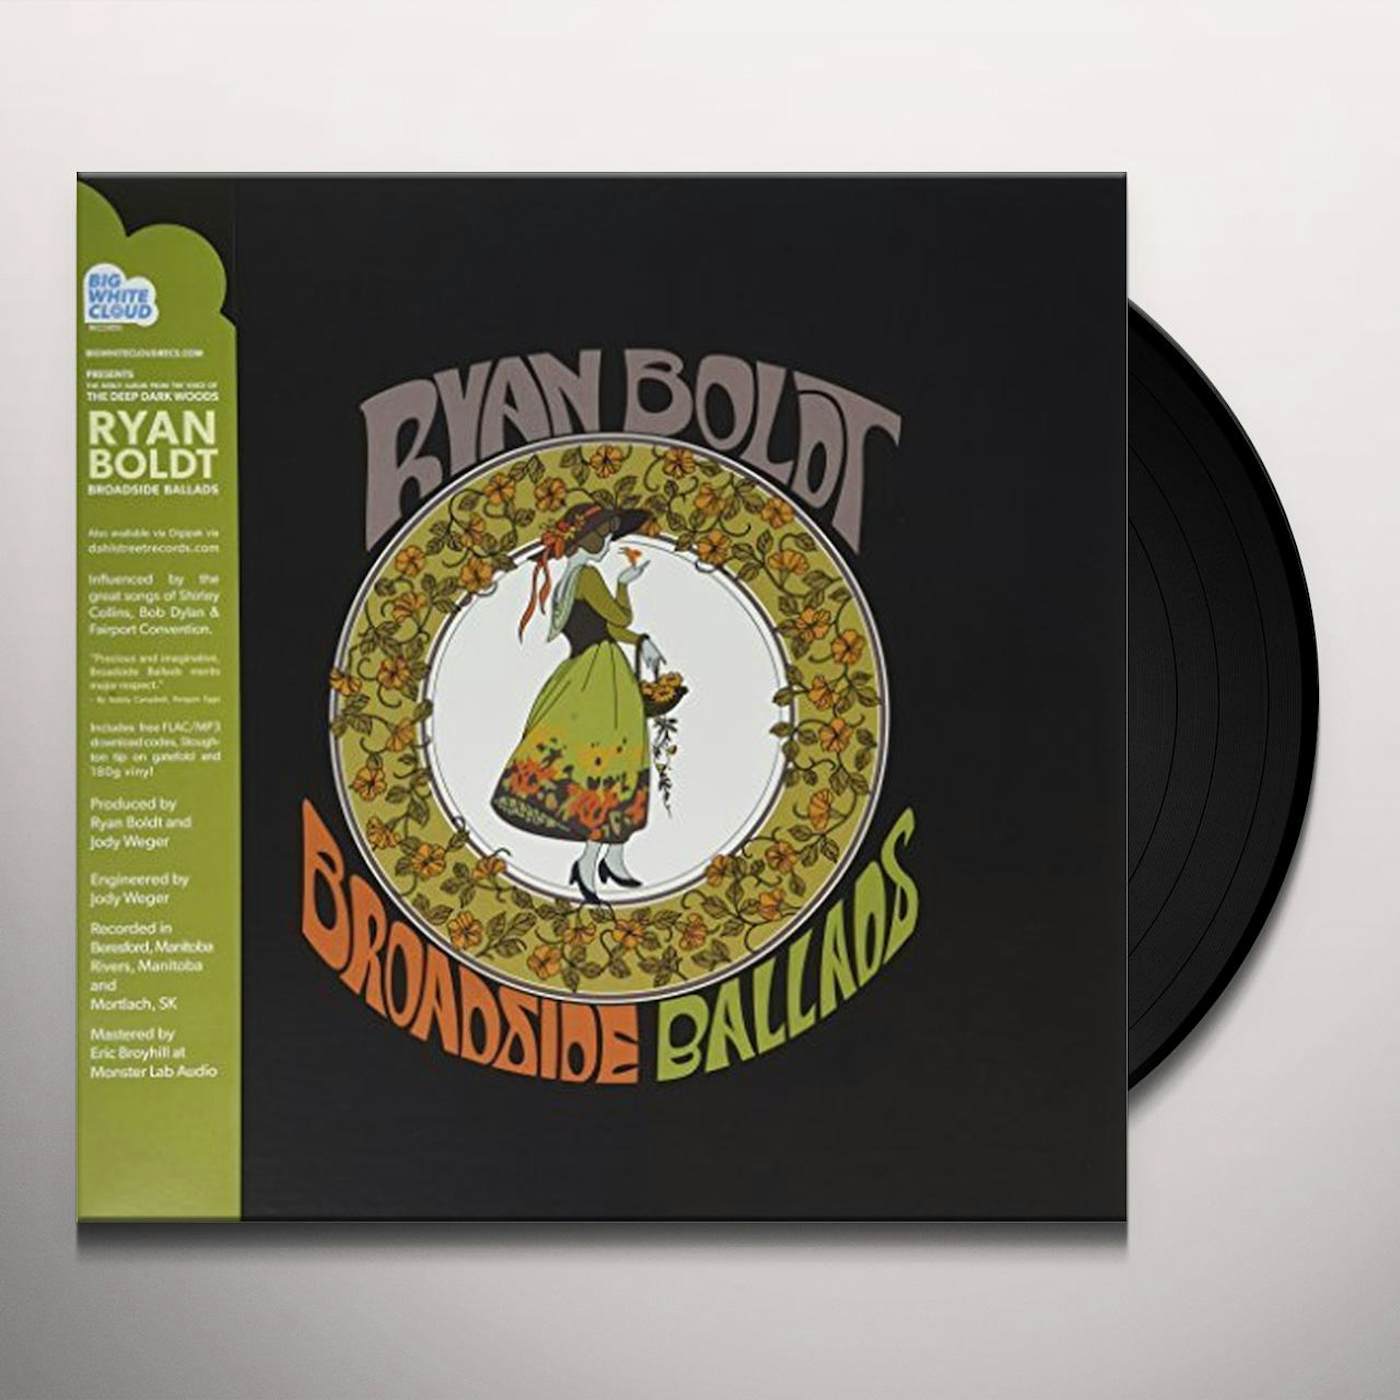 Ryan Boldts Broadside Ballads Vinyl Record